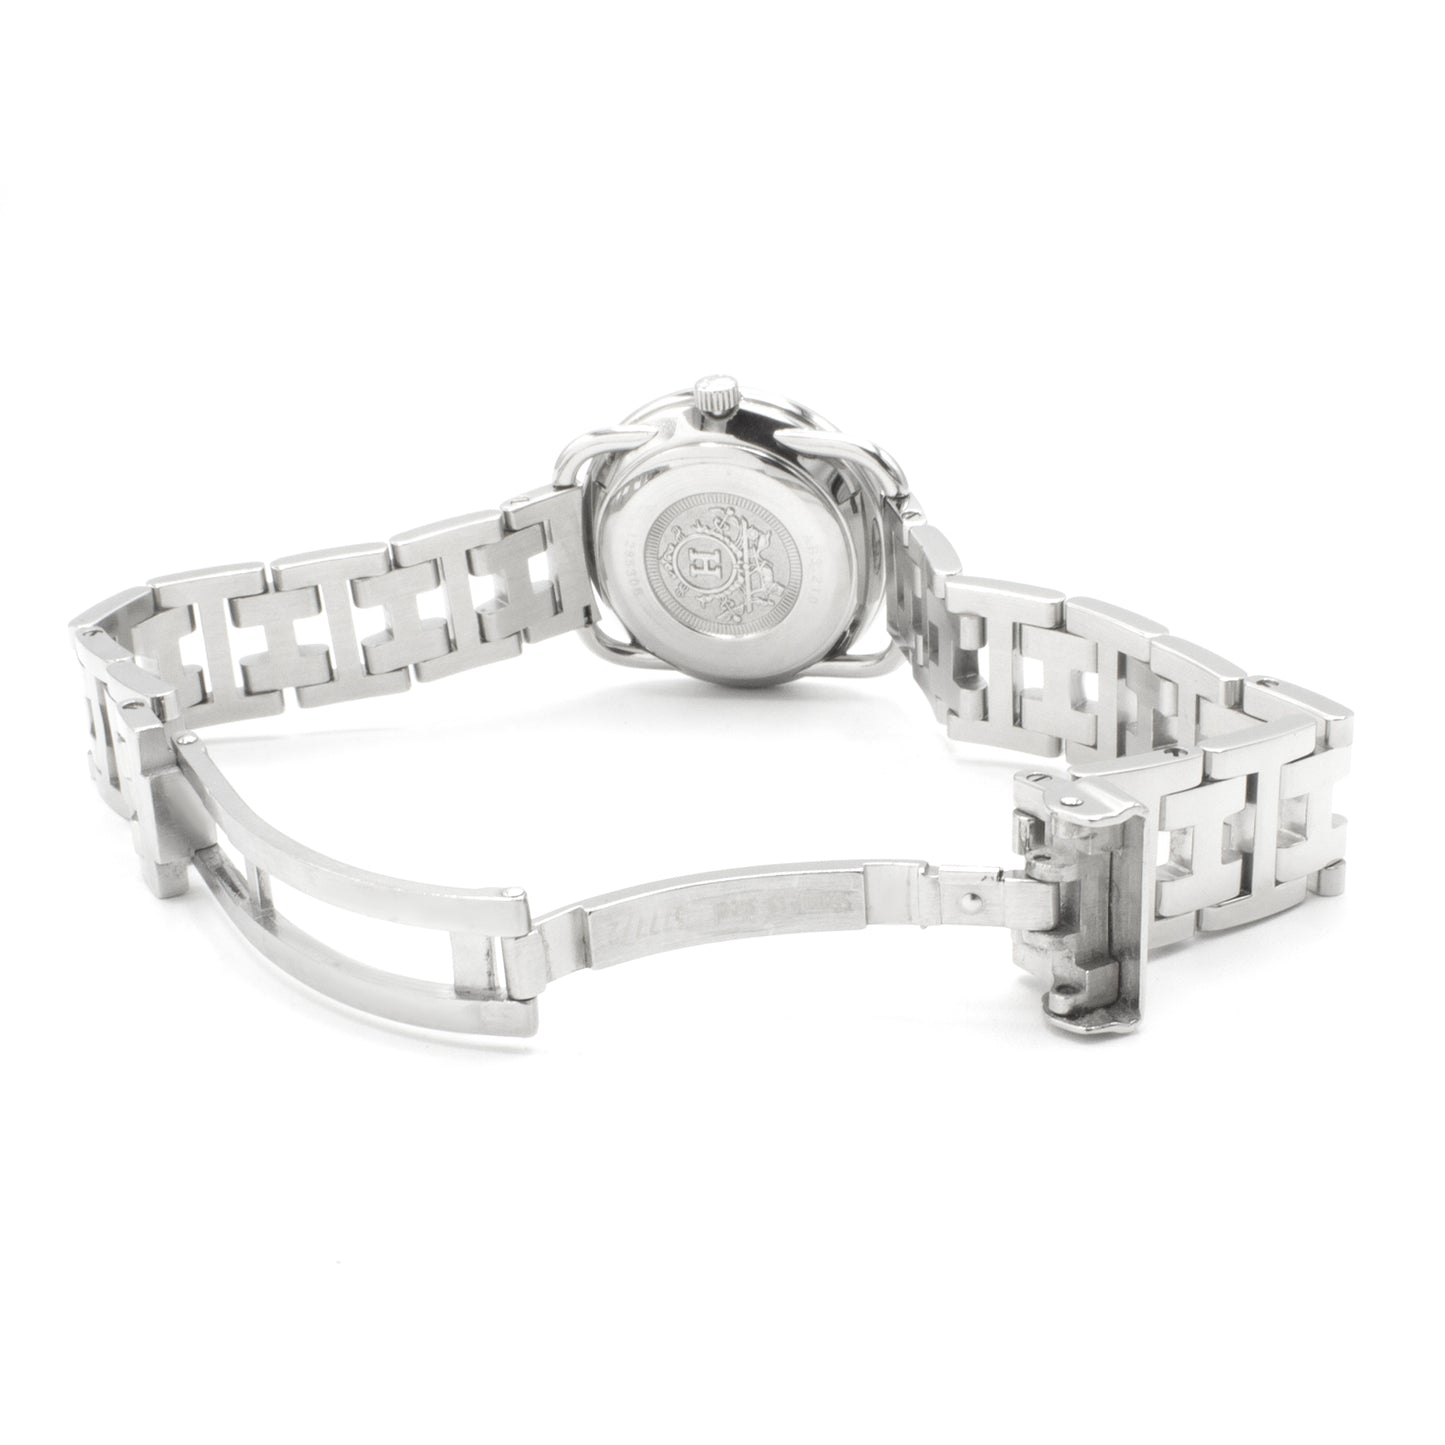 Hermès Arceau AR3.210 watch